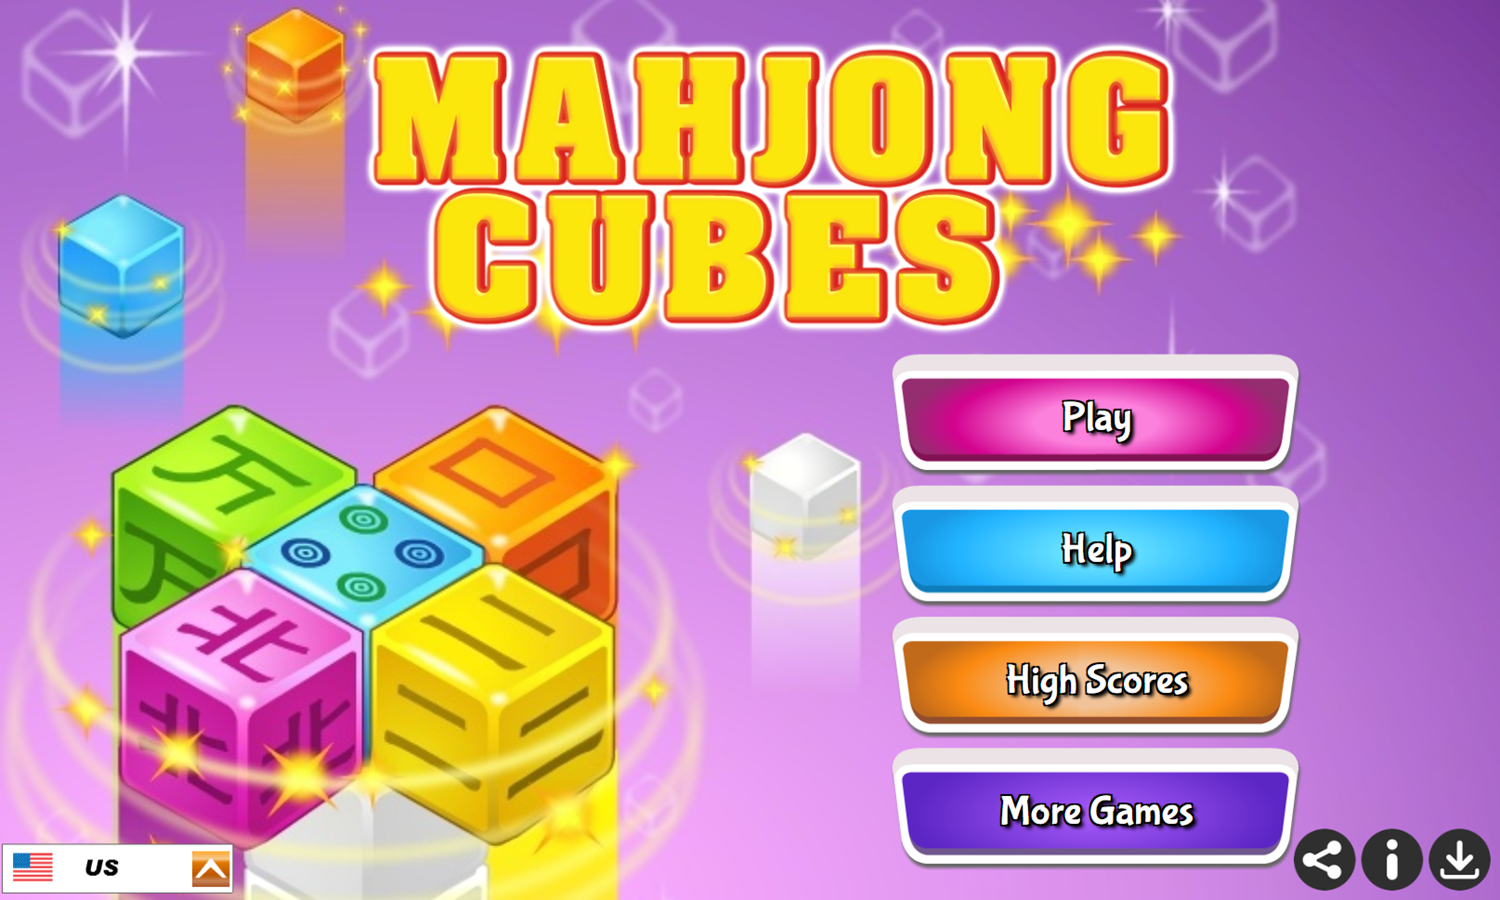 Mahjong Cubes Game Welcome Screen Screenshot.